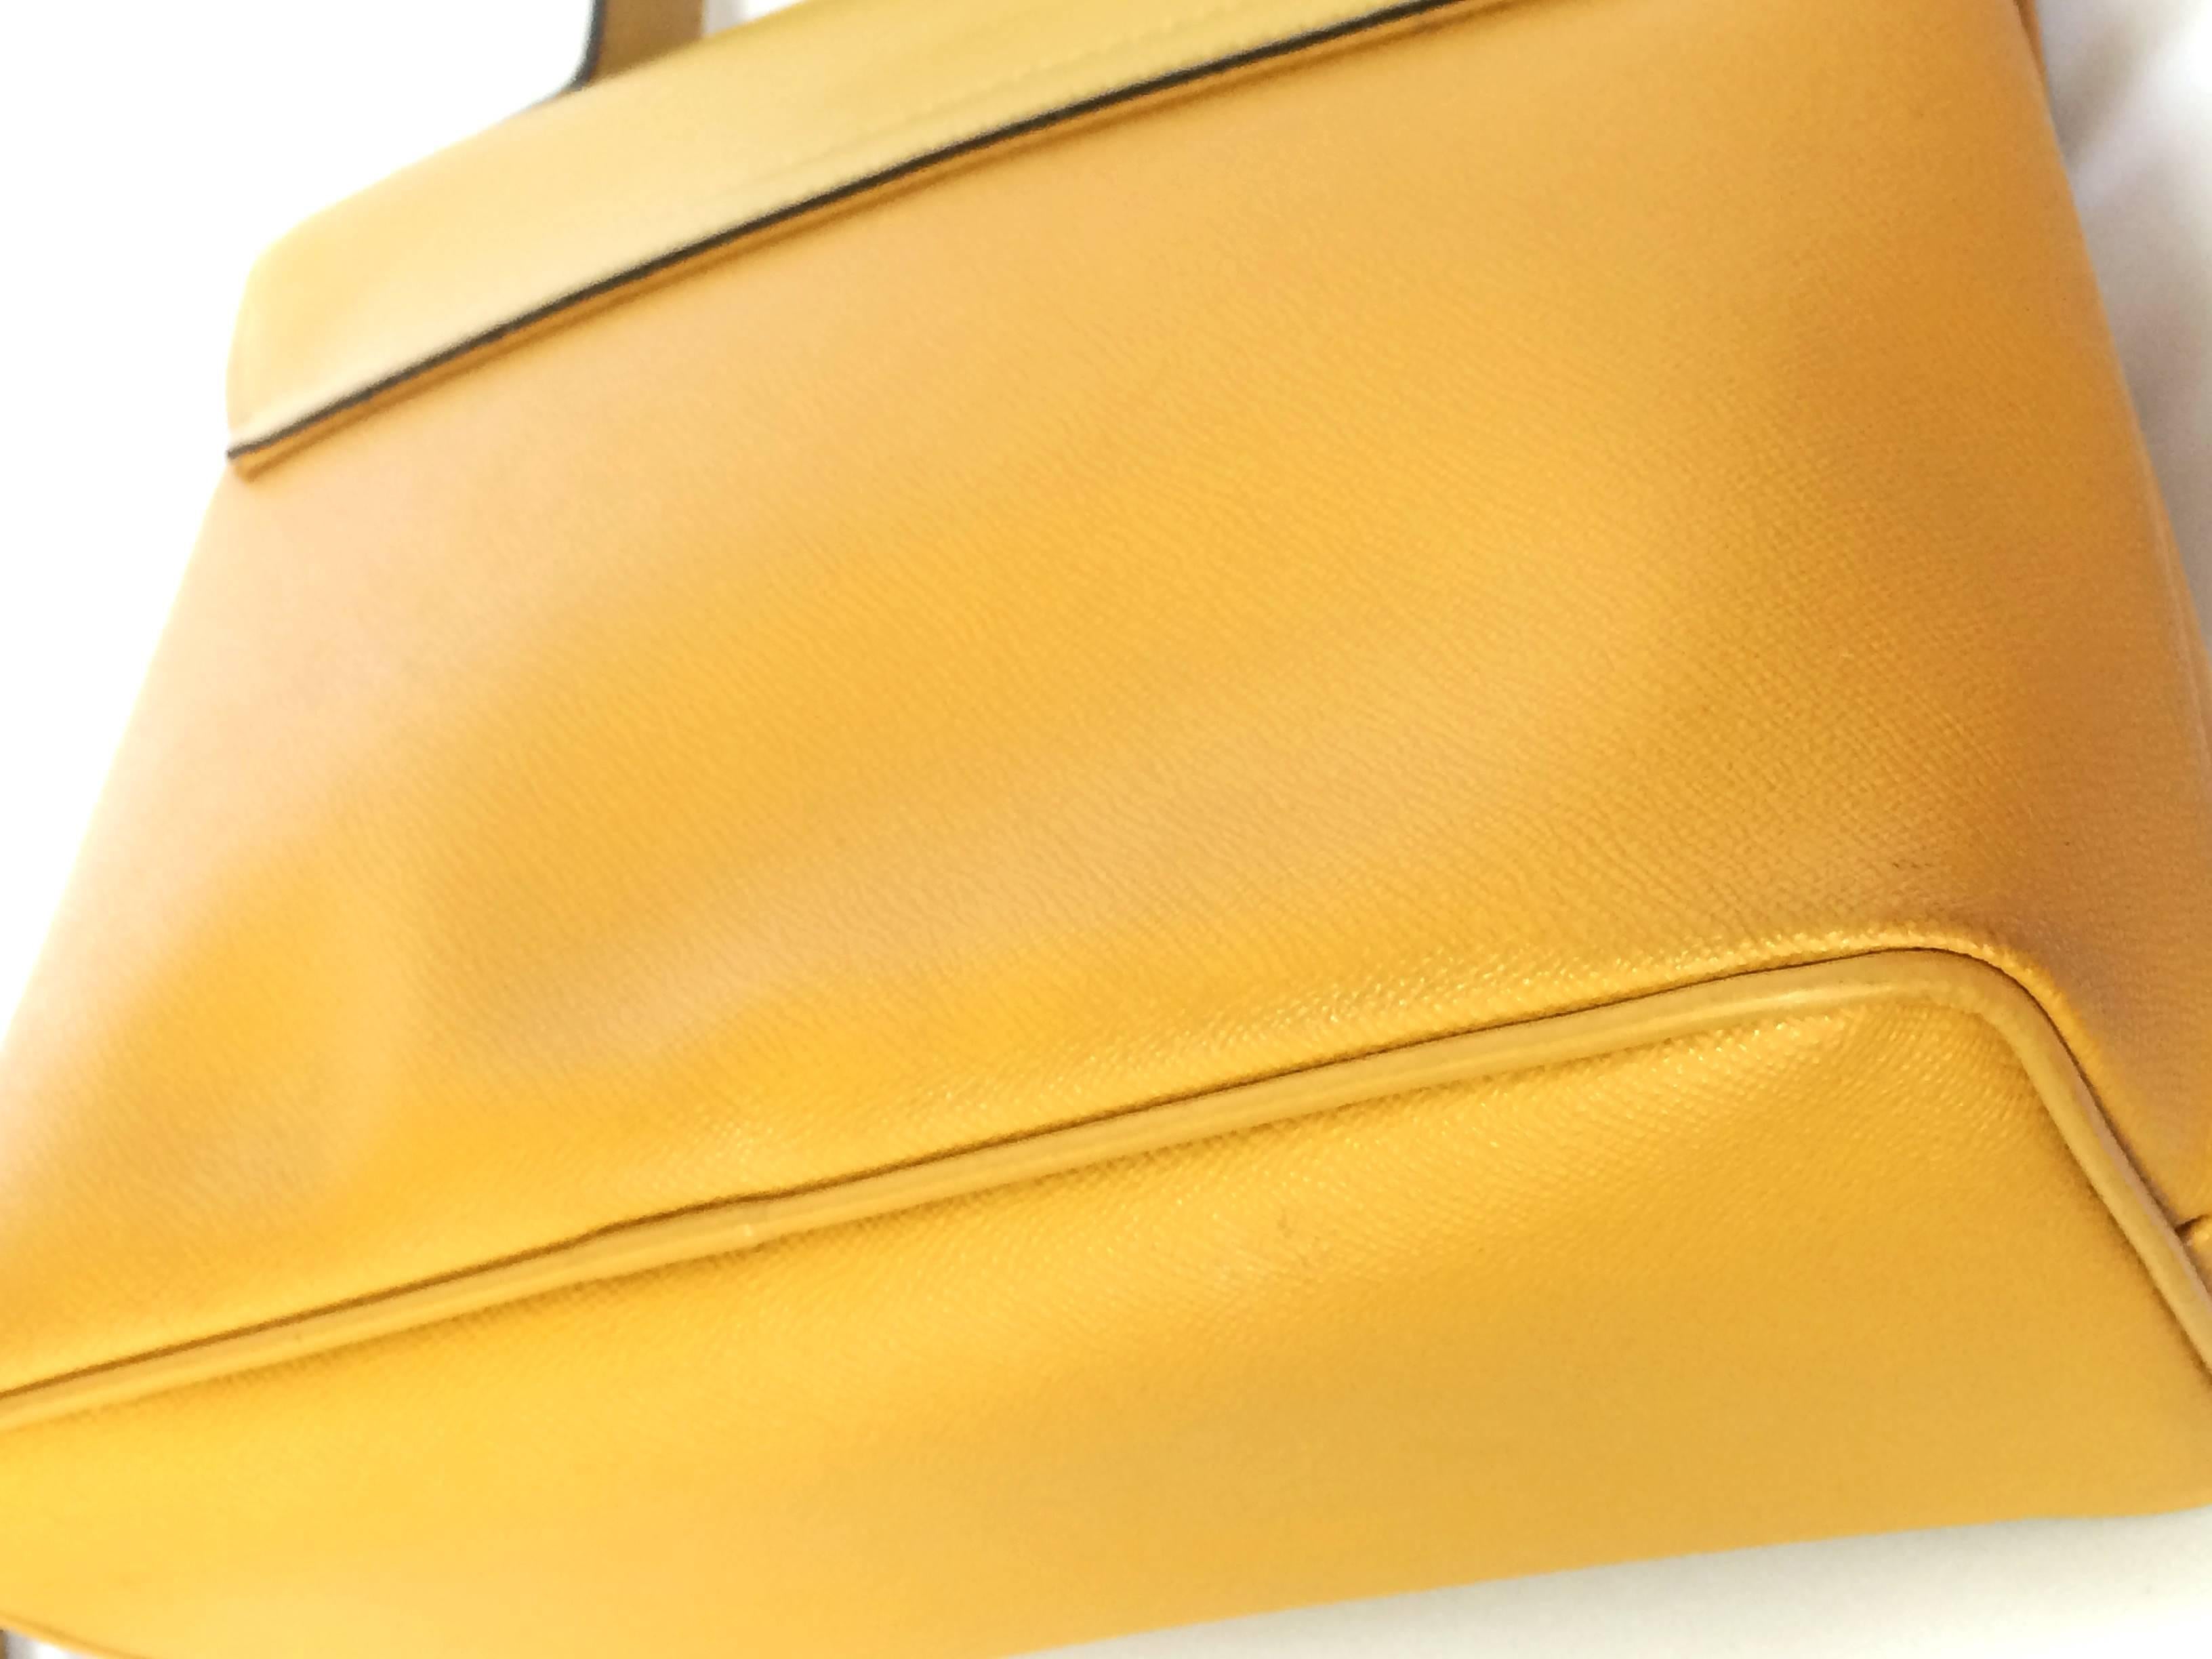 Women's MINT. Vintage Nina Ricci yellow leather handbag purse with shoulder strap.